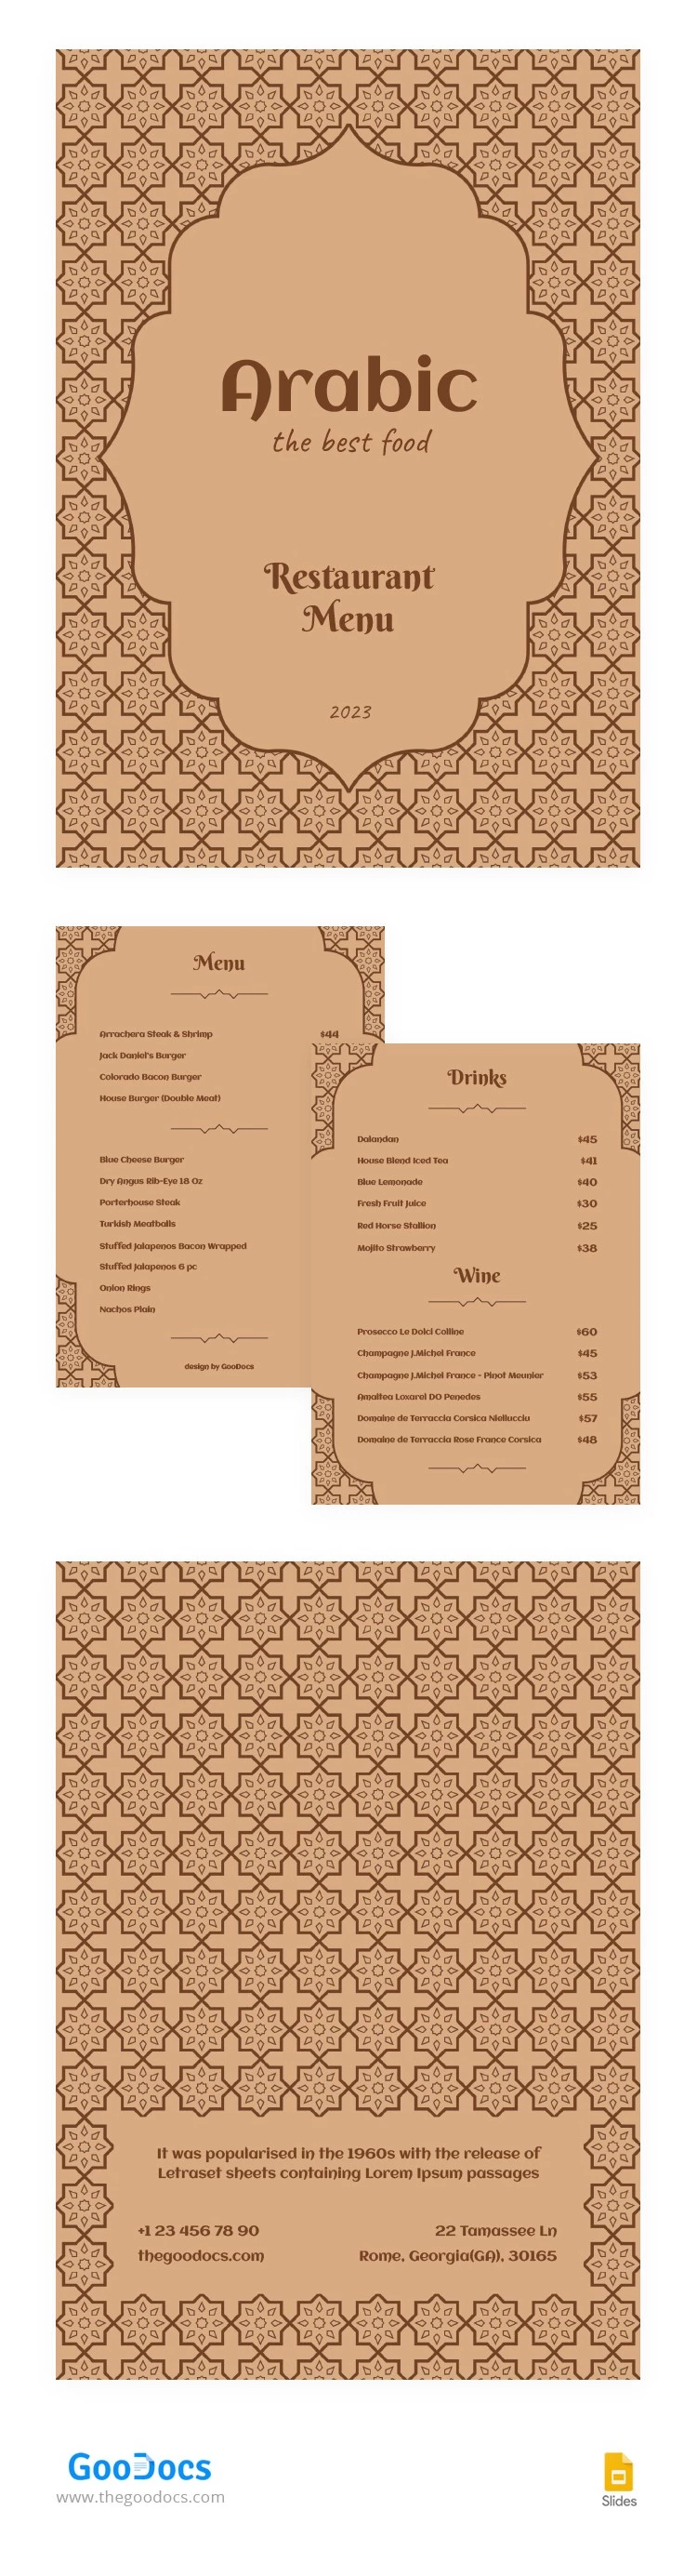 Beau Menu de Restaurant Arabe - free Google Docs Template - 10065275